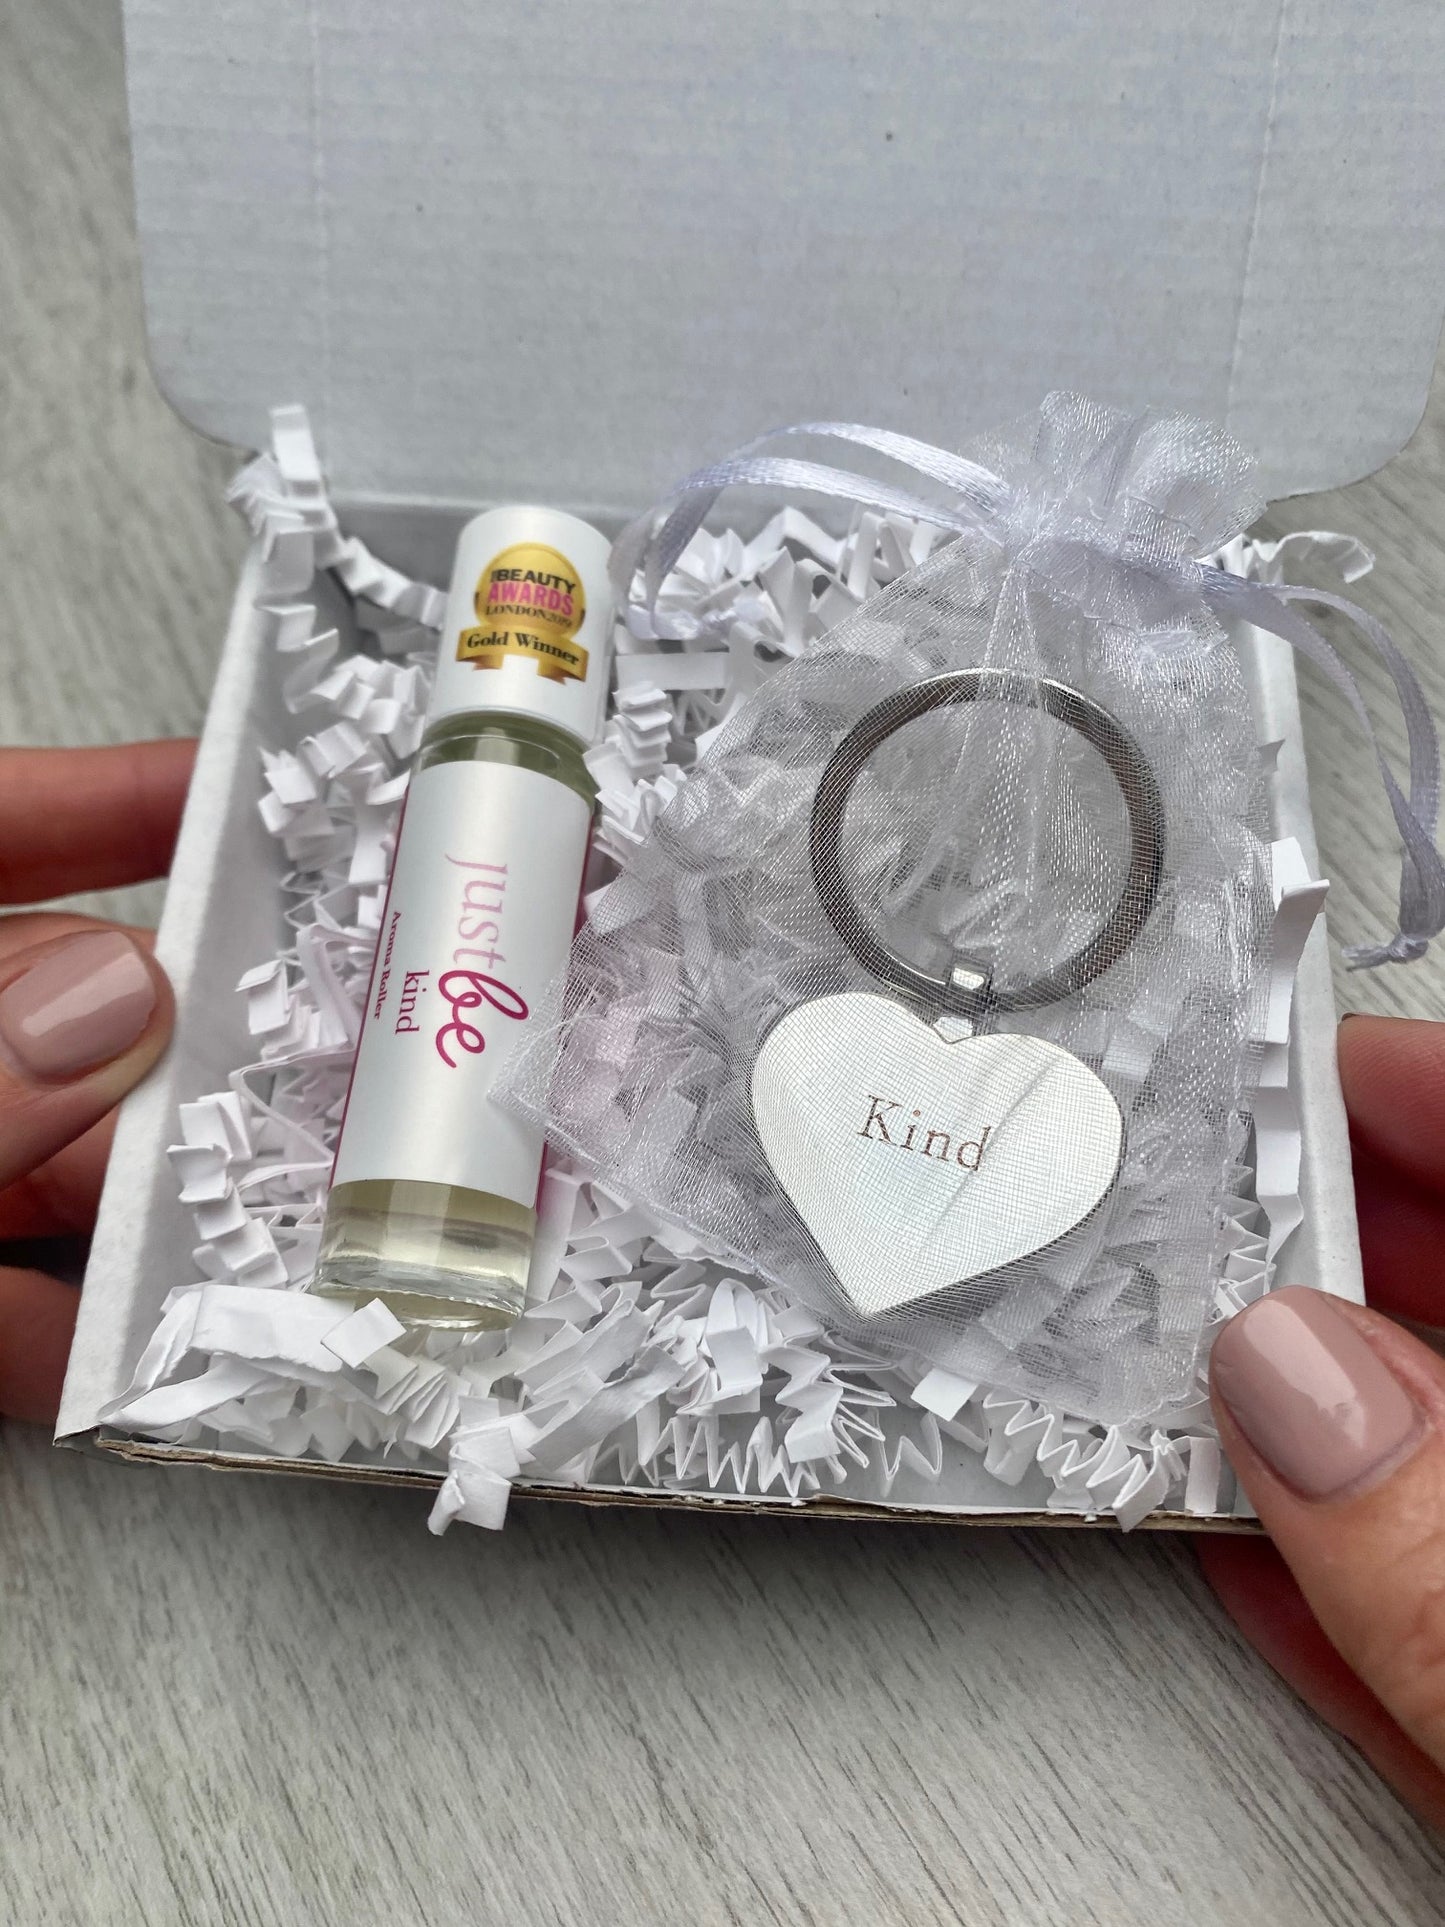 Kind Rollerball & Keyring Letterbox Gift Set